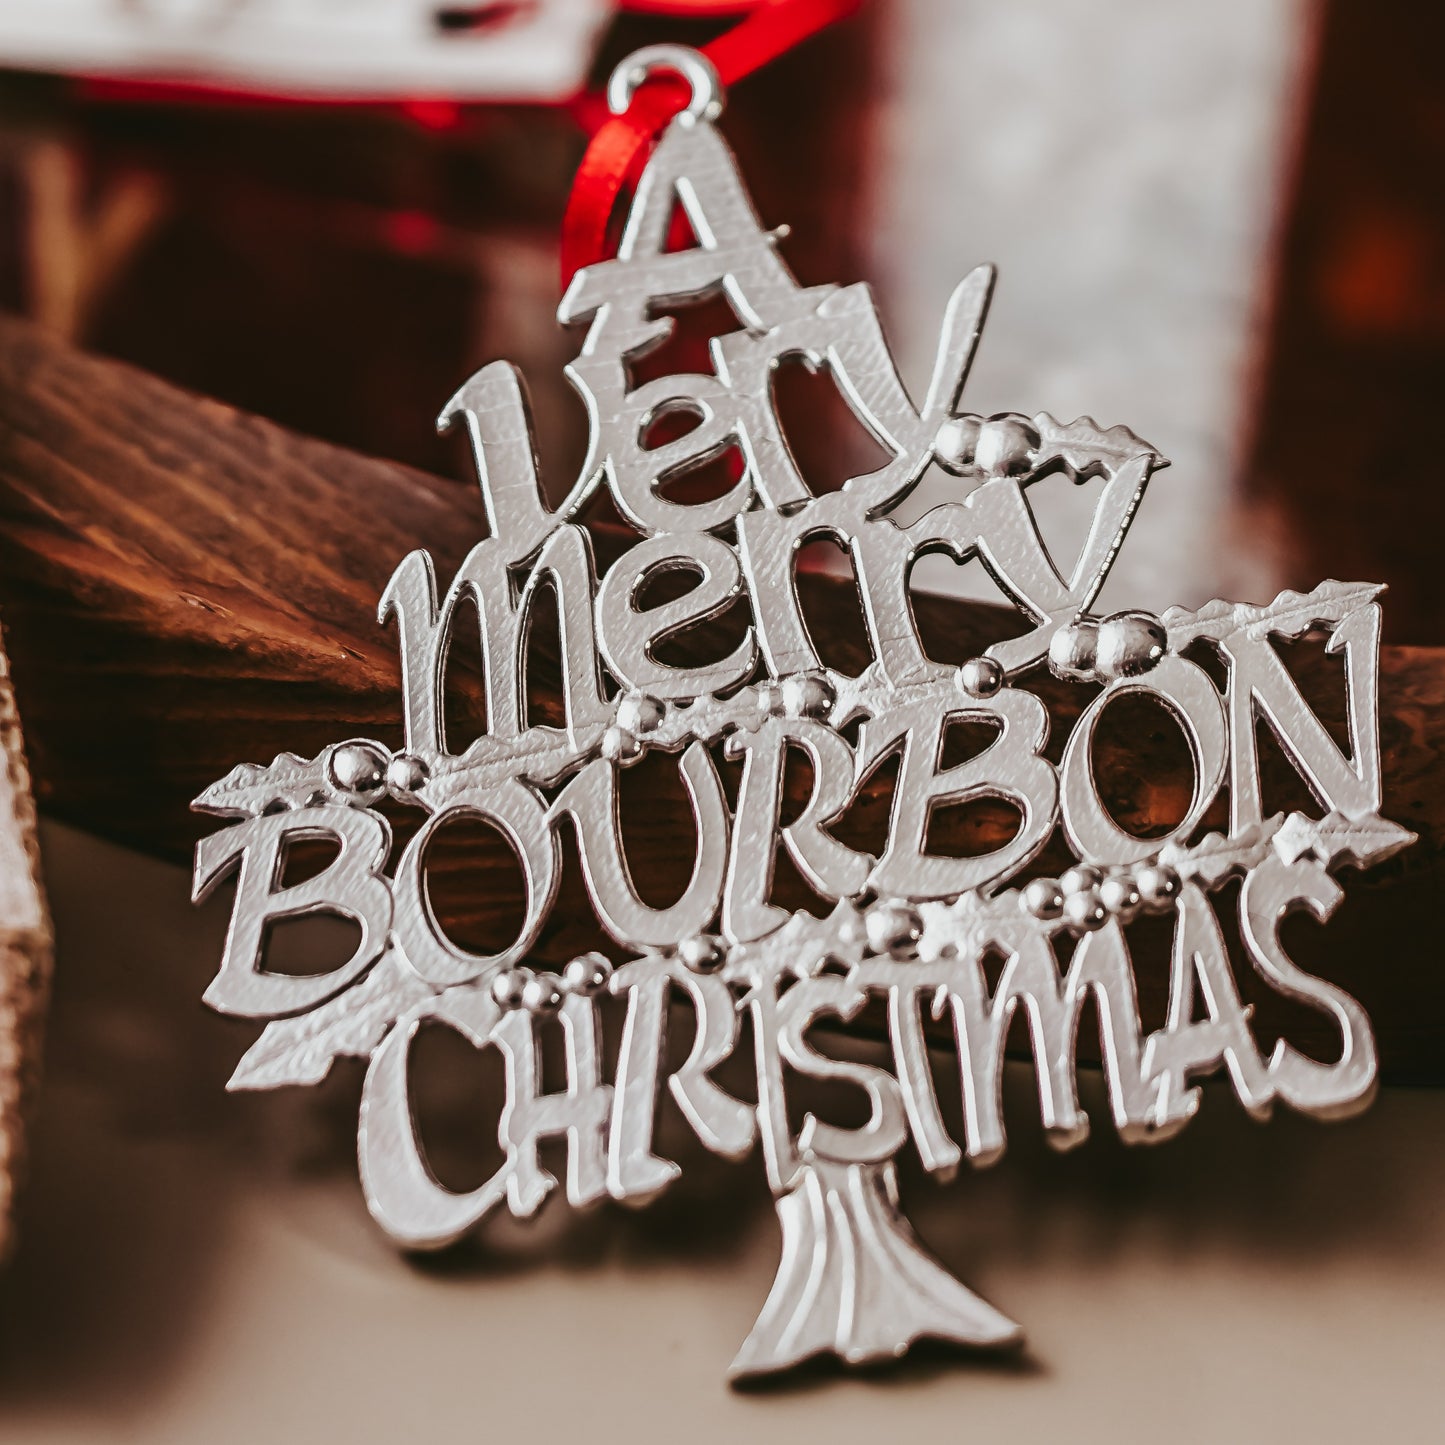 Bourbon Christmas Ornament - A Very Merry Bourbon Christmas - Bourbon Hunter Gift